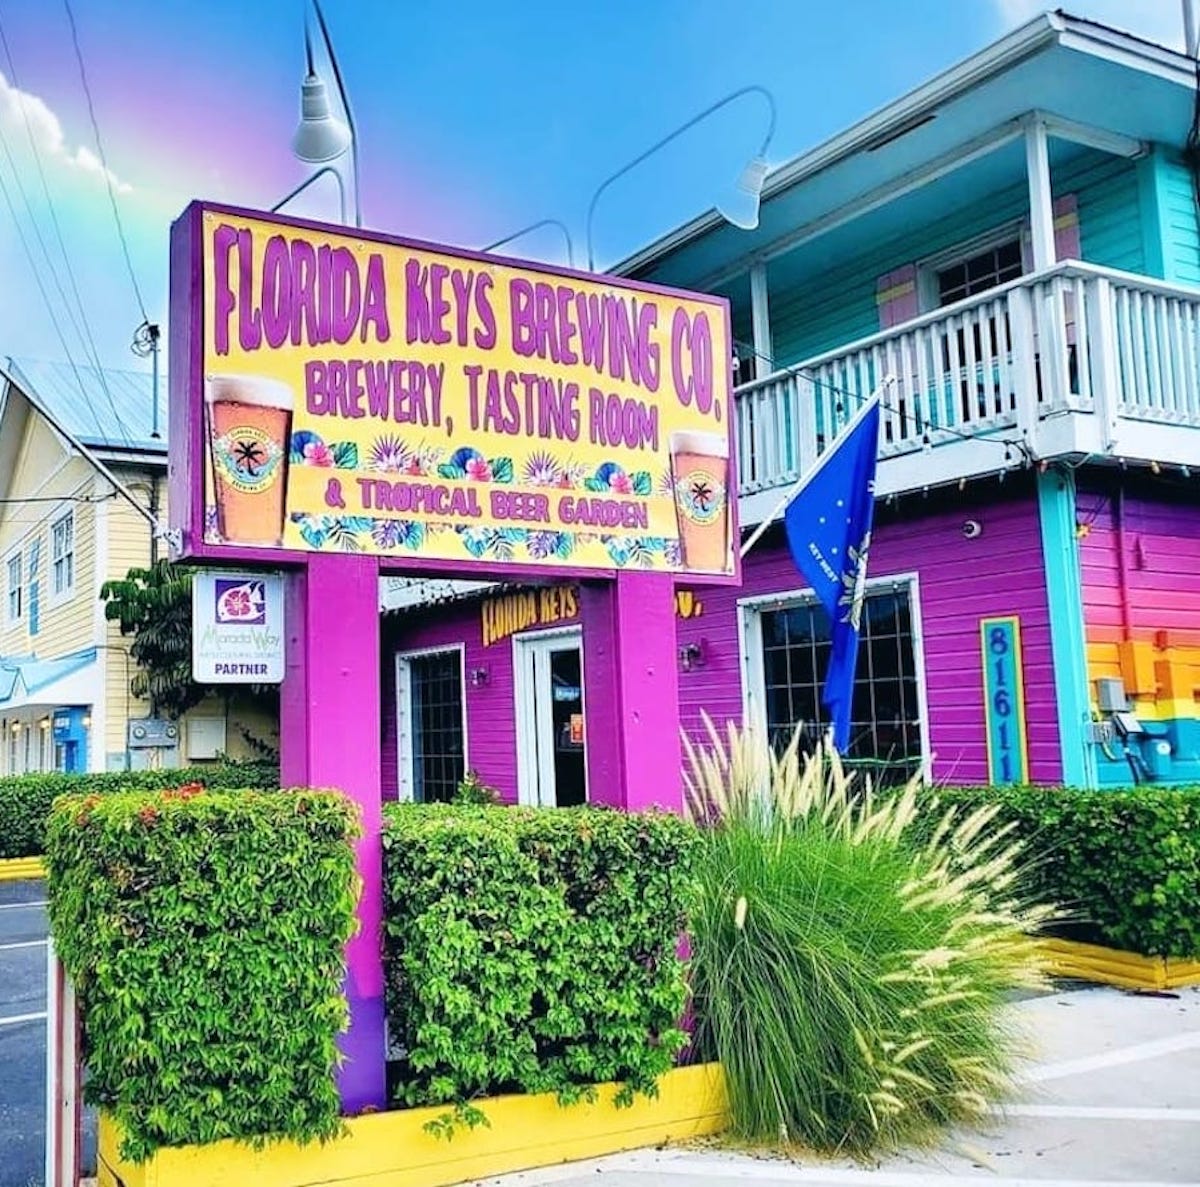 Perché devi visitare la Florida Keys Brewing Company a Islamorada